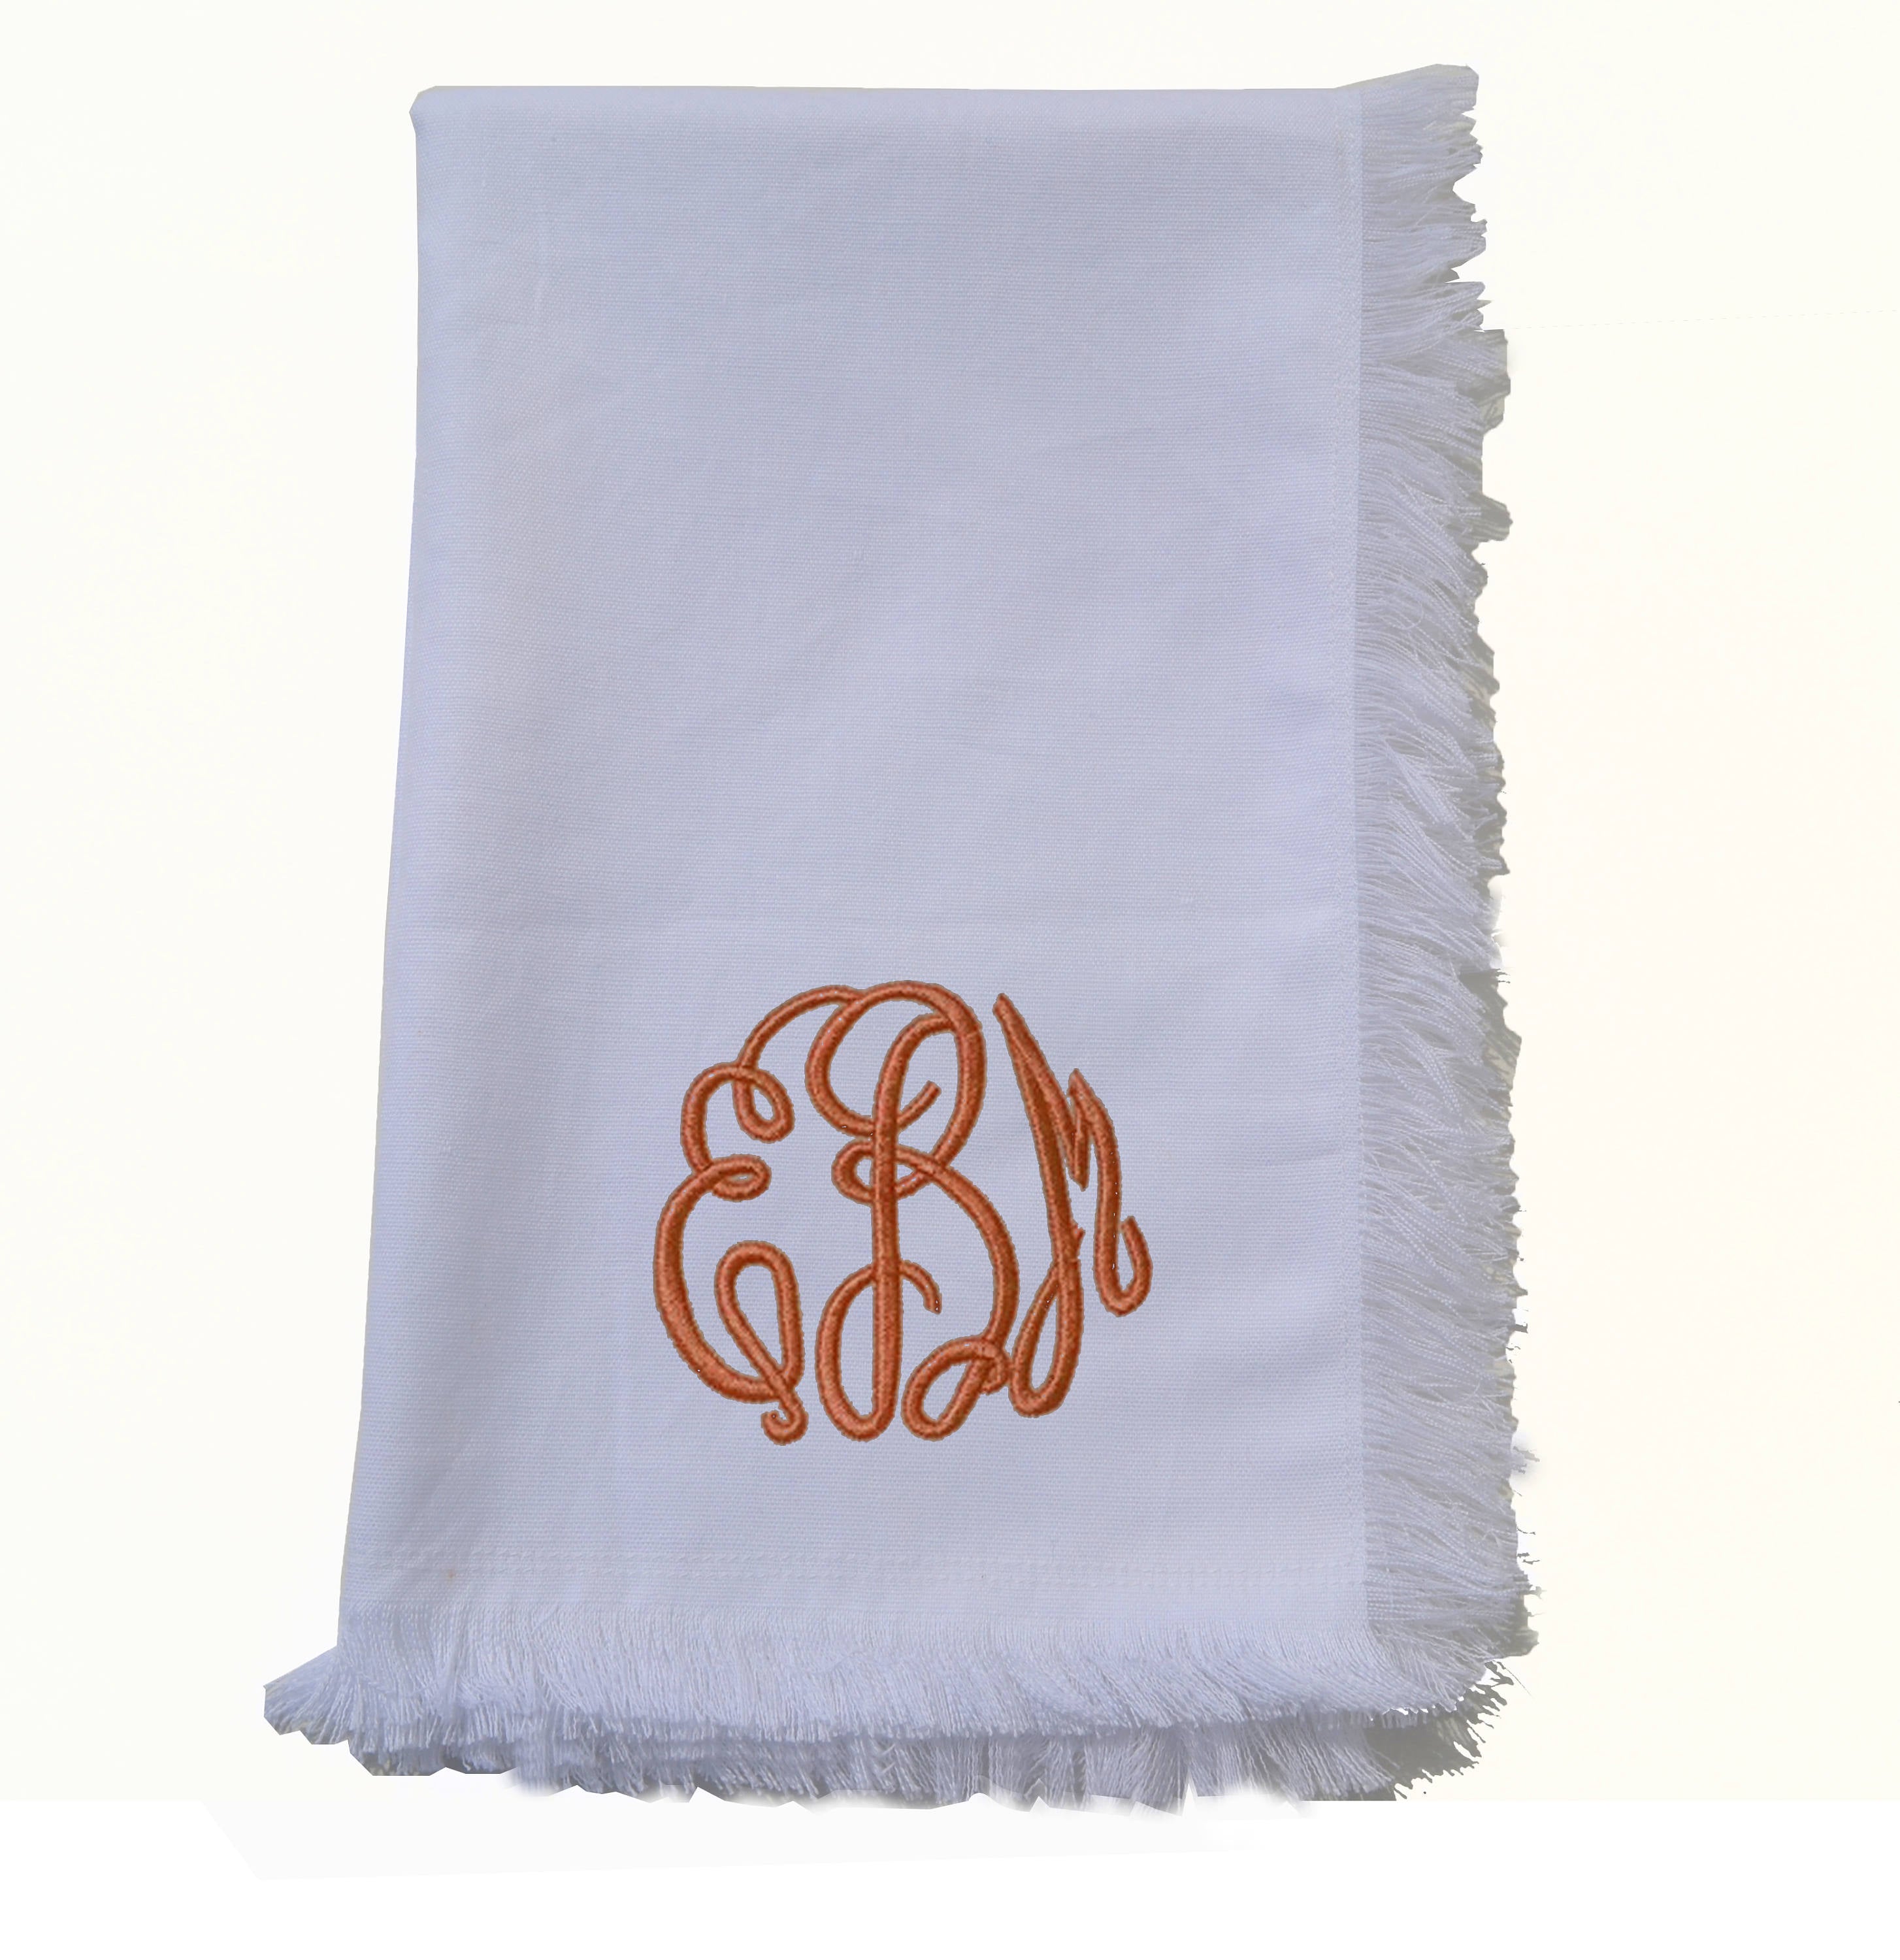 White cotton monogrammed tea towel, Tea towel with fringes